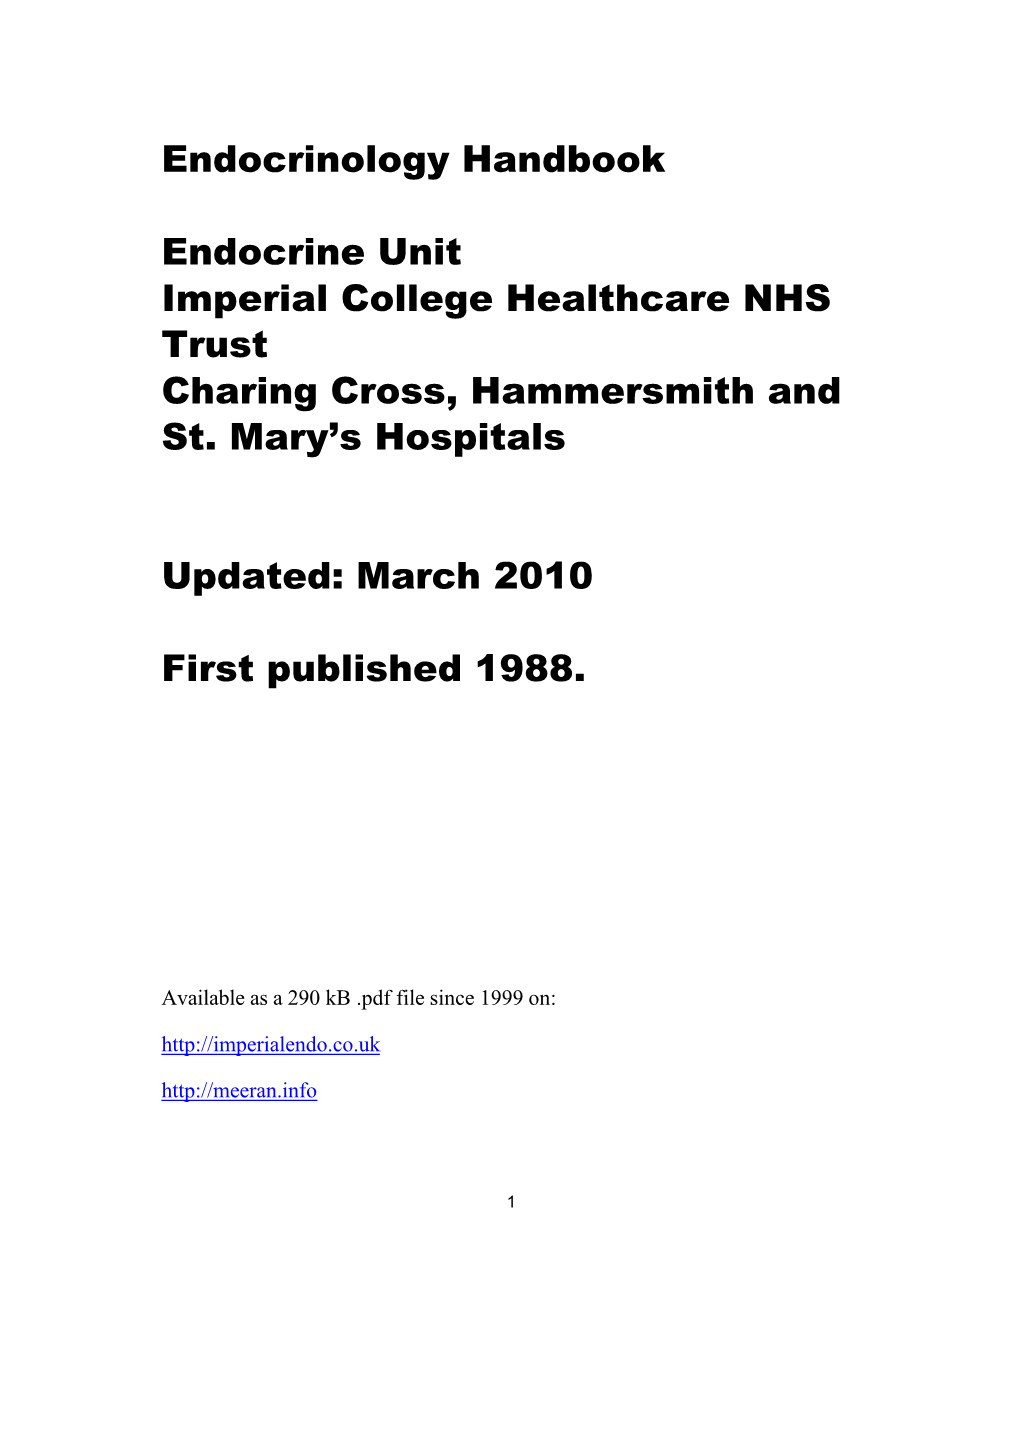 Endocrinology Handbook Endocrine Unit Imperial College Healthcare